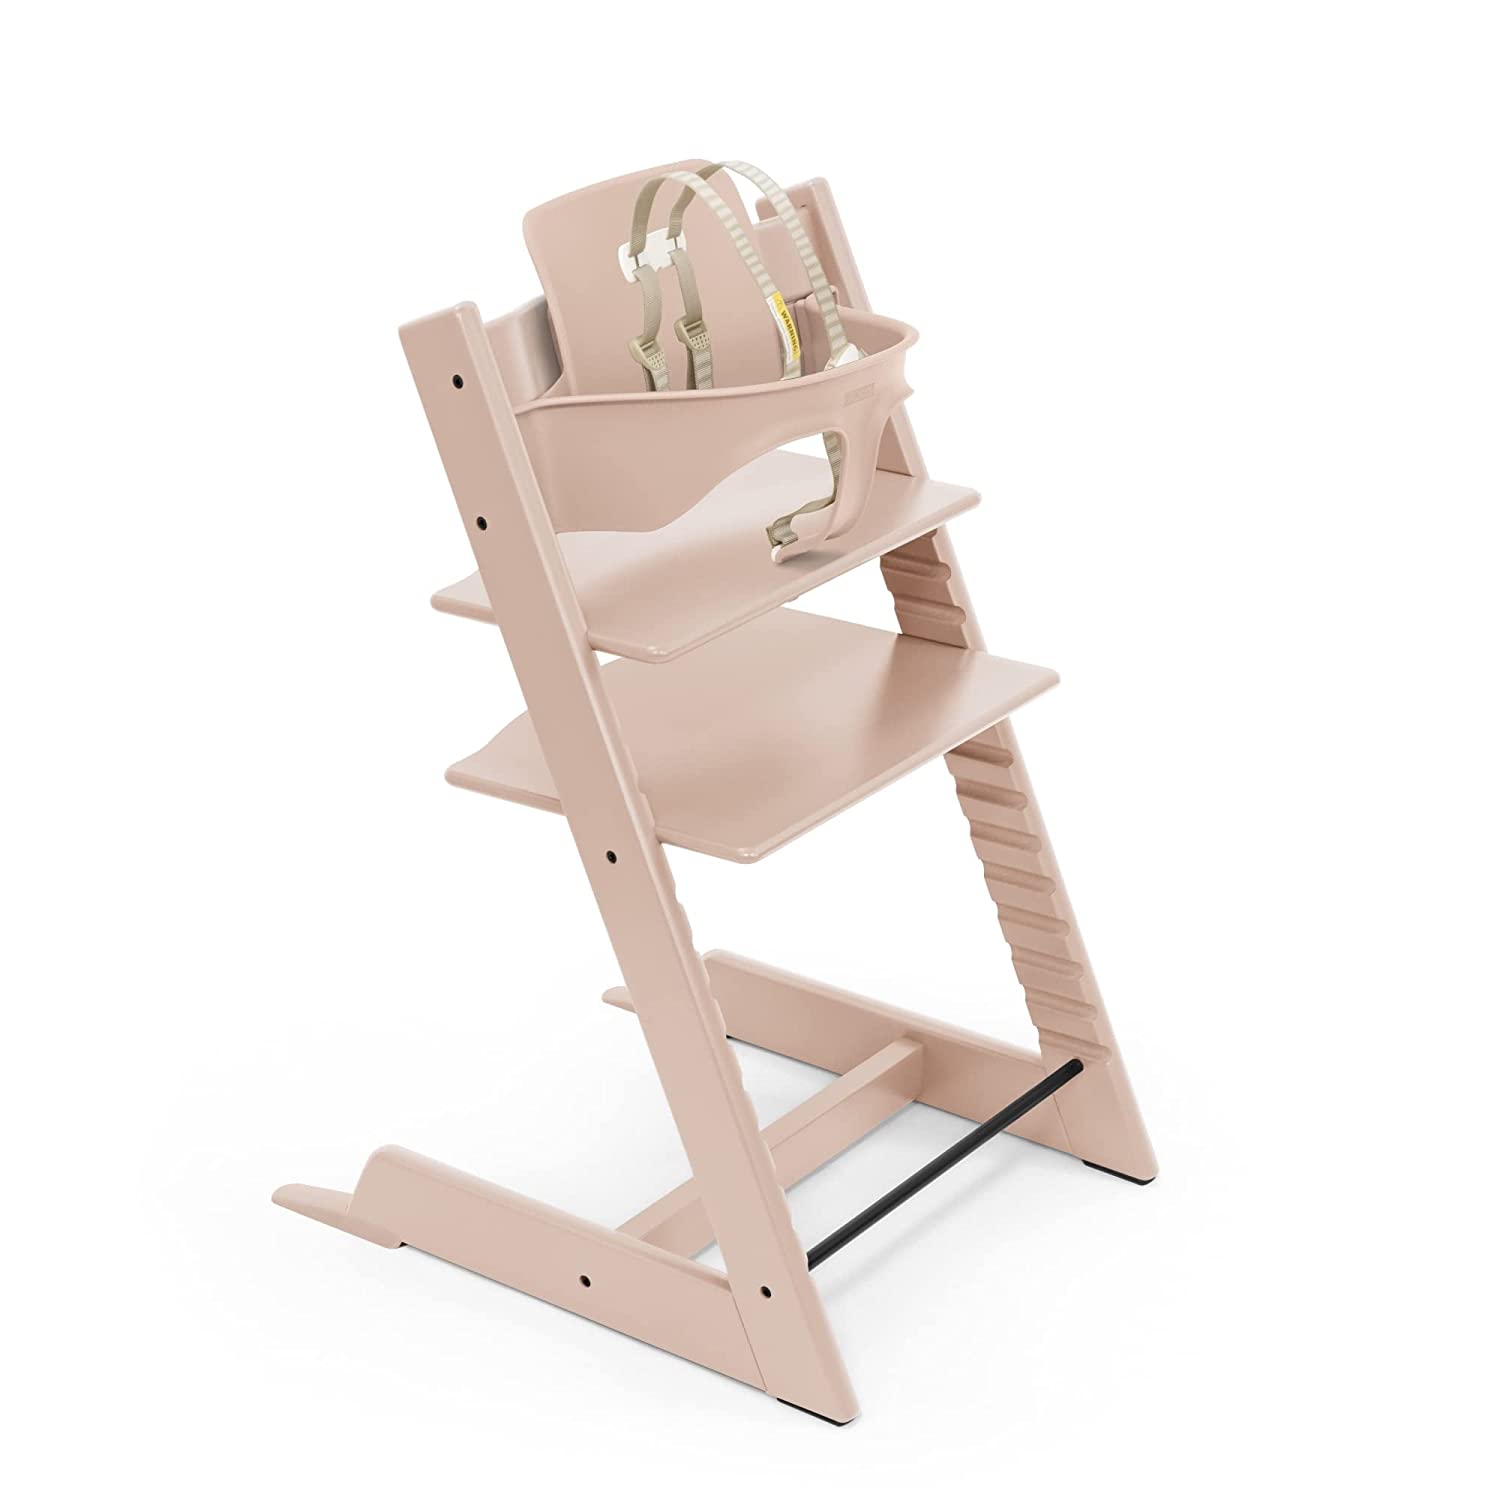 Детский стульчик-трансформер Stokke Tripp Trapp, розовый детский стульчик трансформер stokke steps серый белый